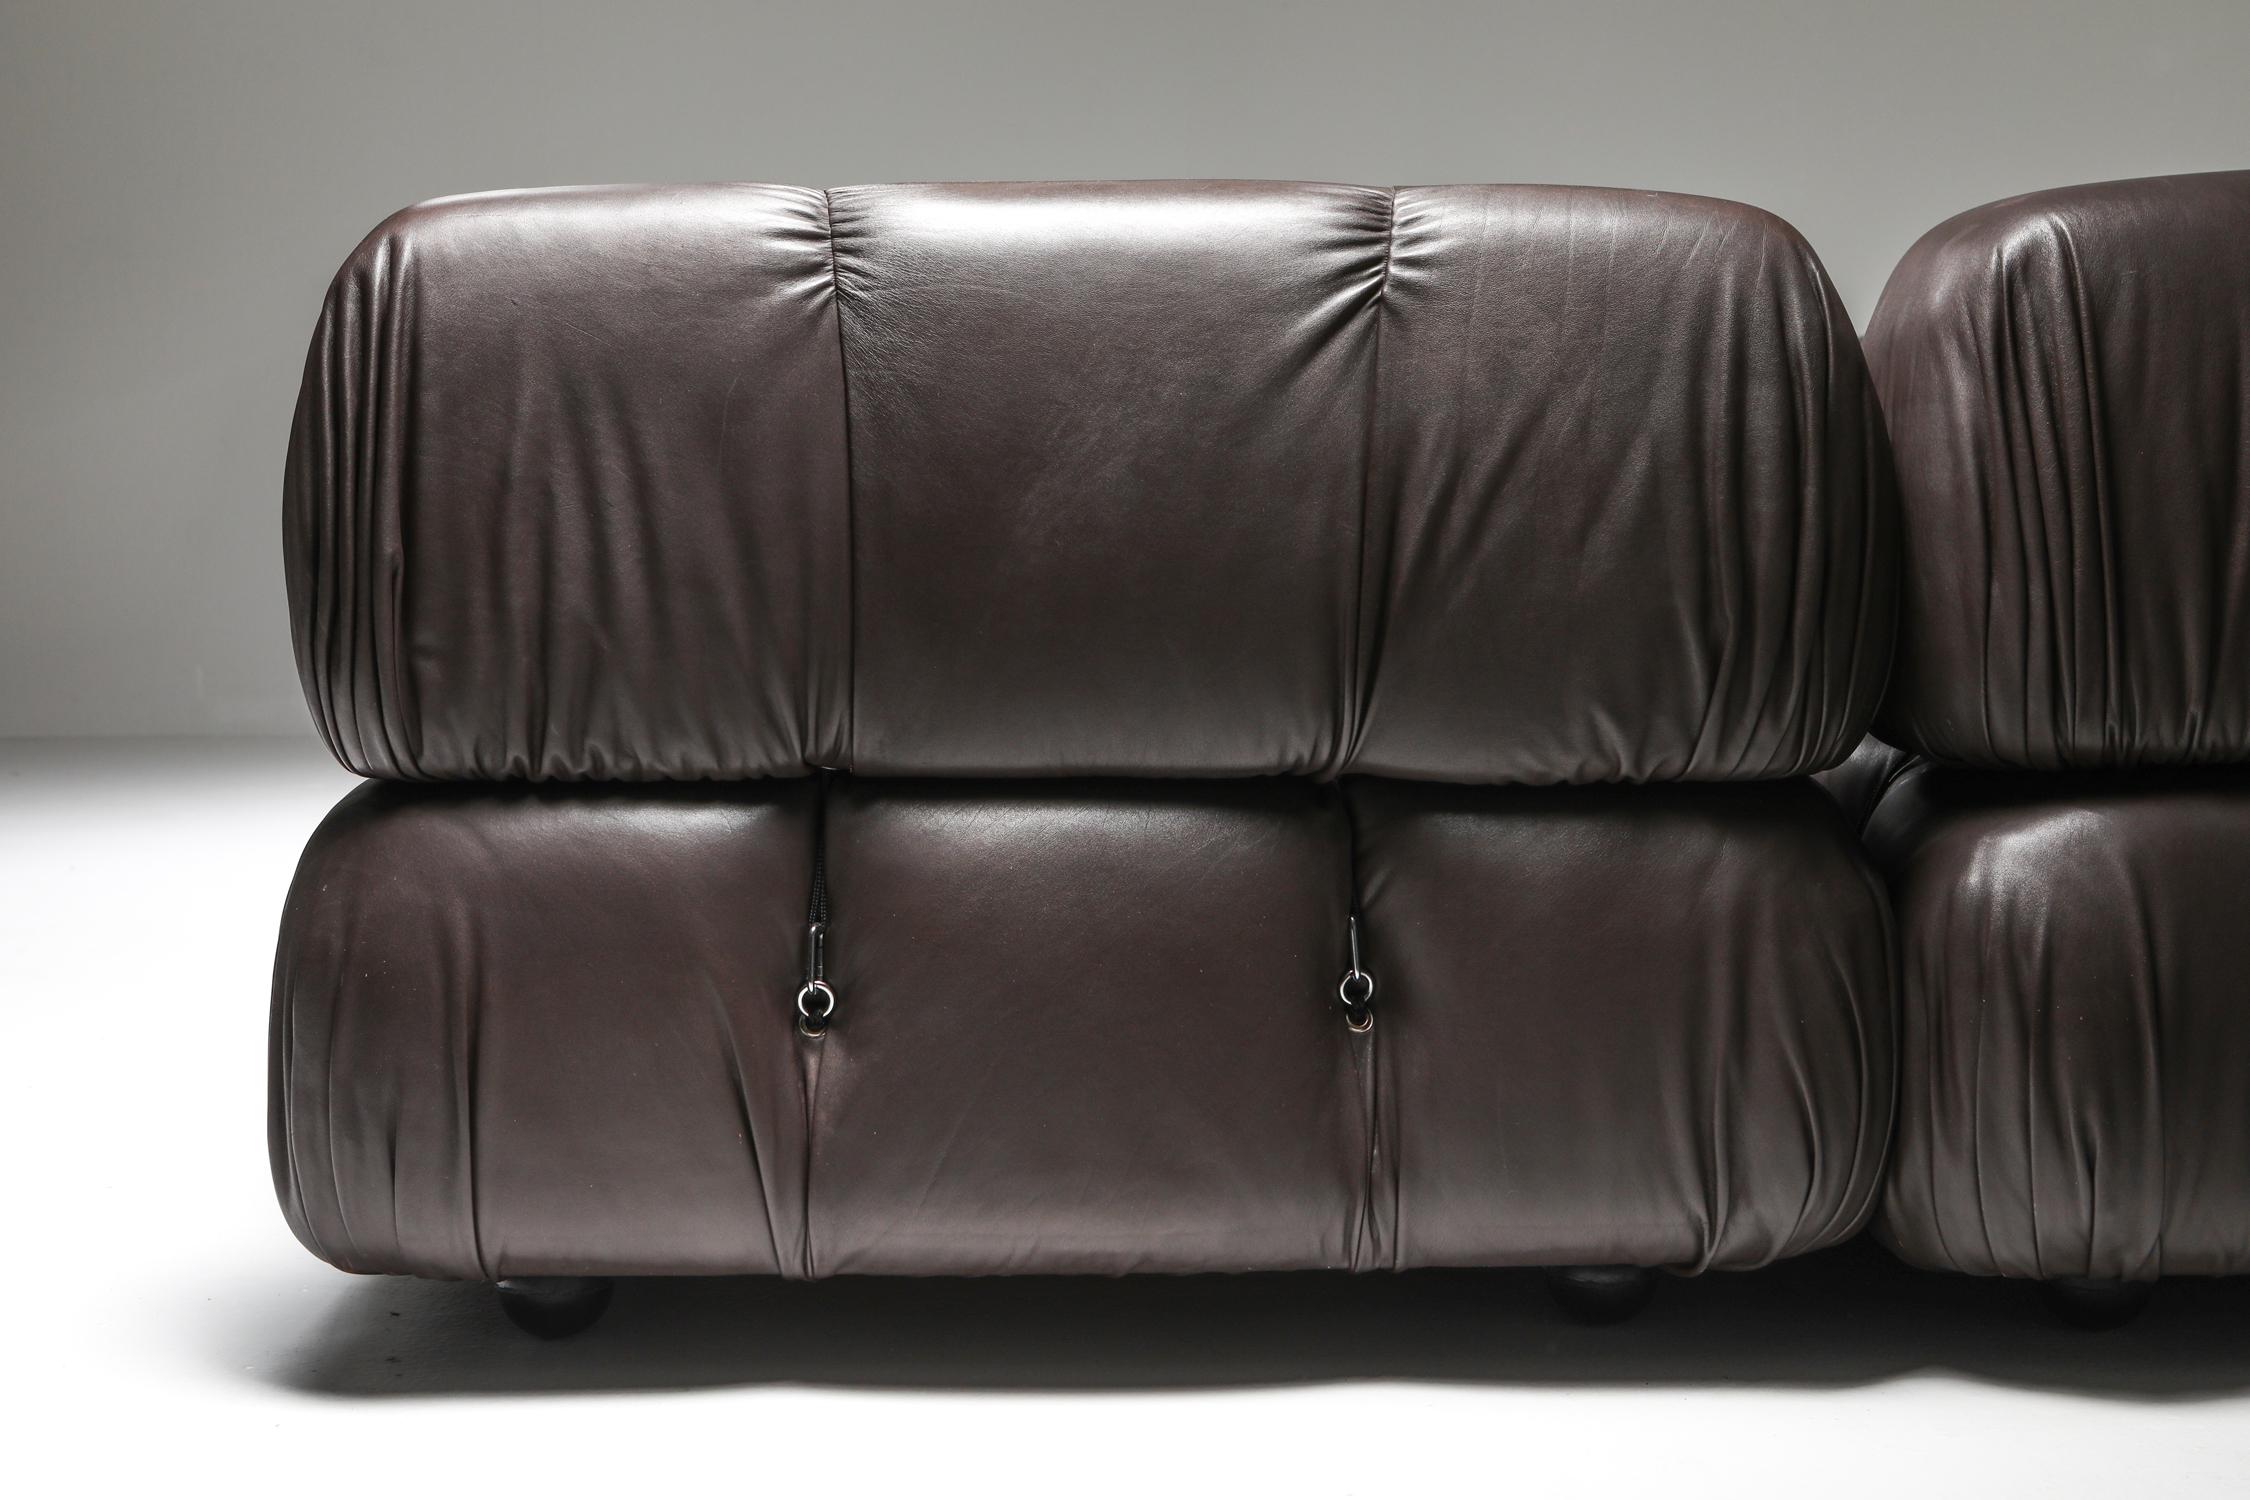 Mario Bellini's Camaleonda Original Sectional Sofa in Chocolate Brown Leather 5